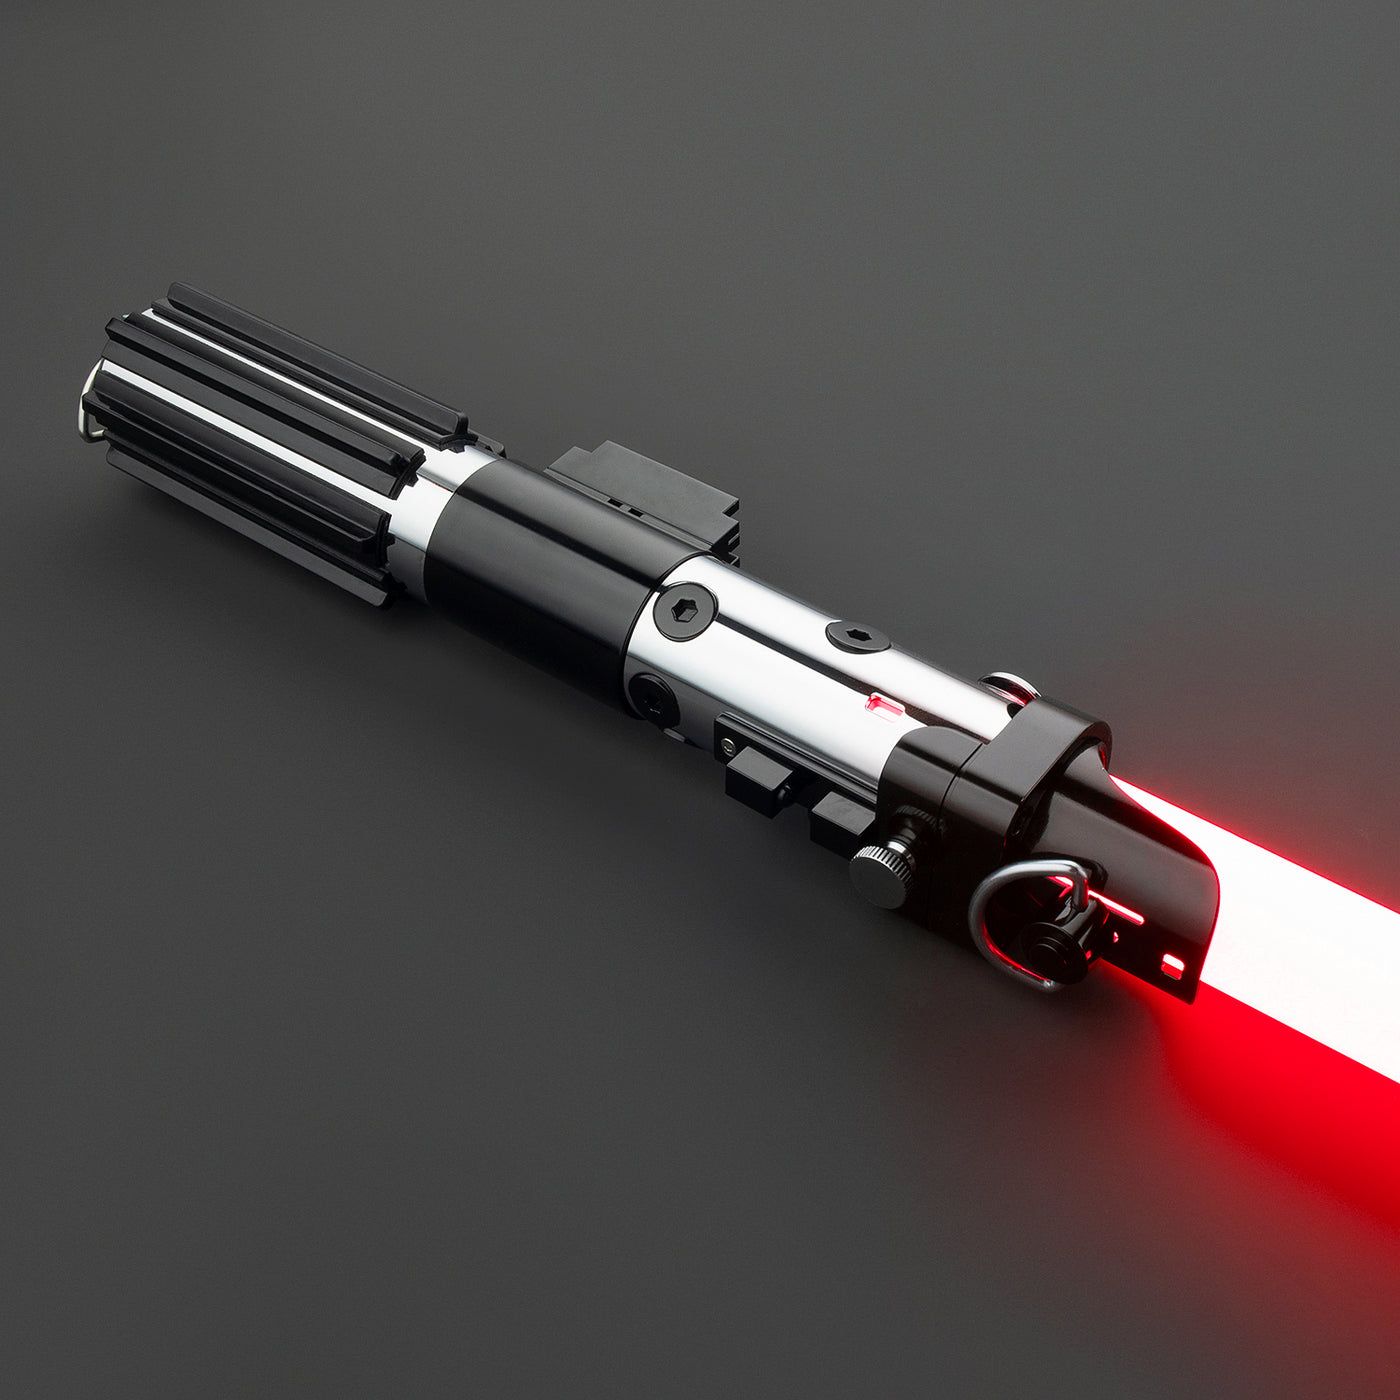 Darth Forsake - KenJo Sabers - Premium RGB Baselit - Star Wars Lightsaber replica Jedi Sith - Best sabershop Europe - Nederland light sabers kopen -